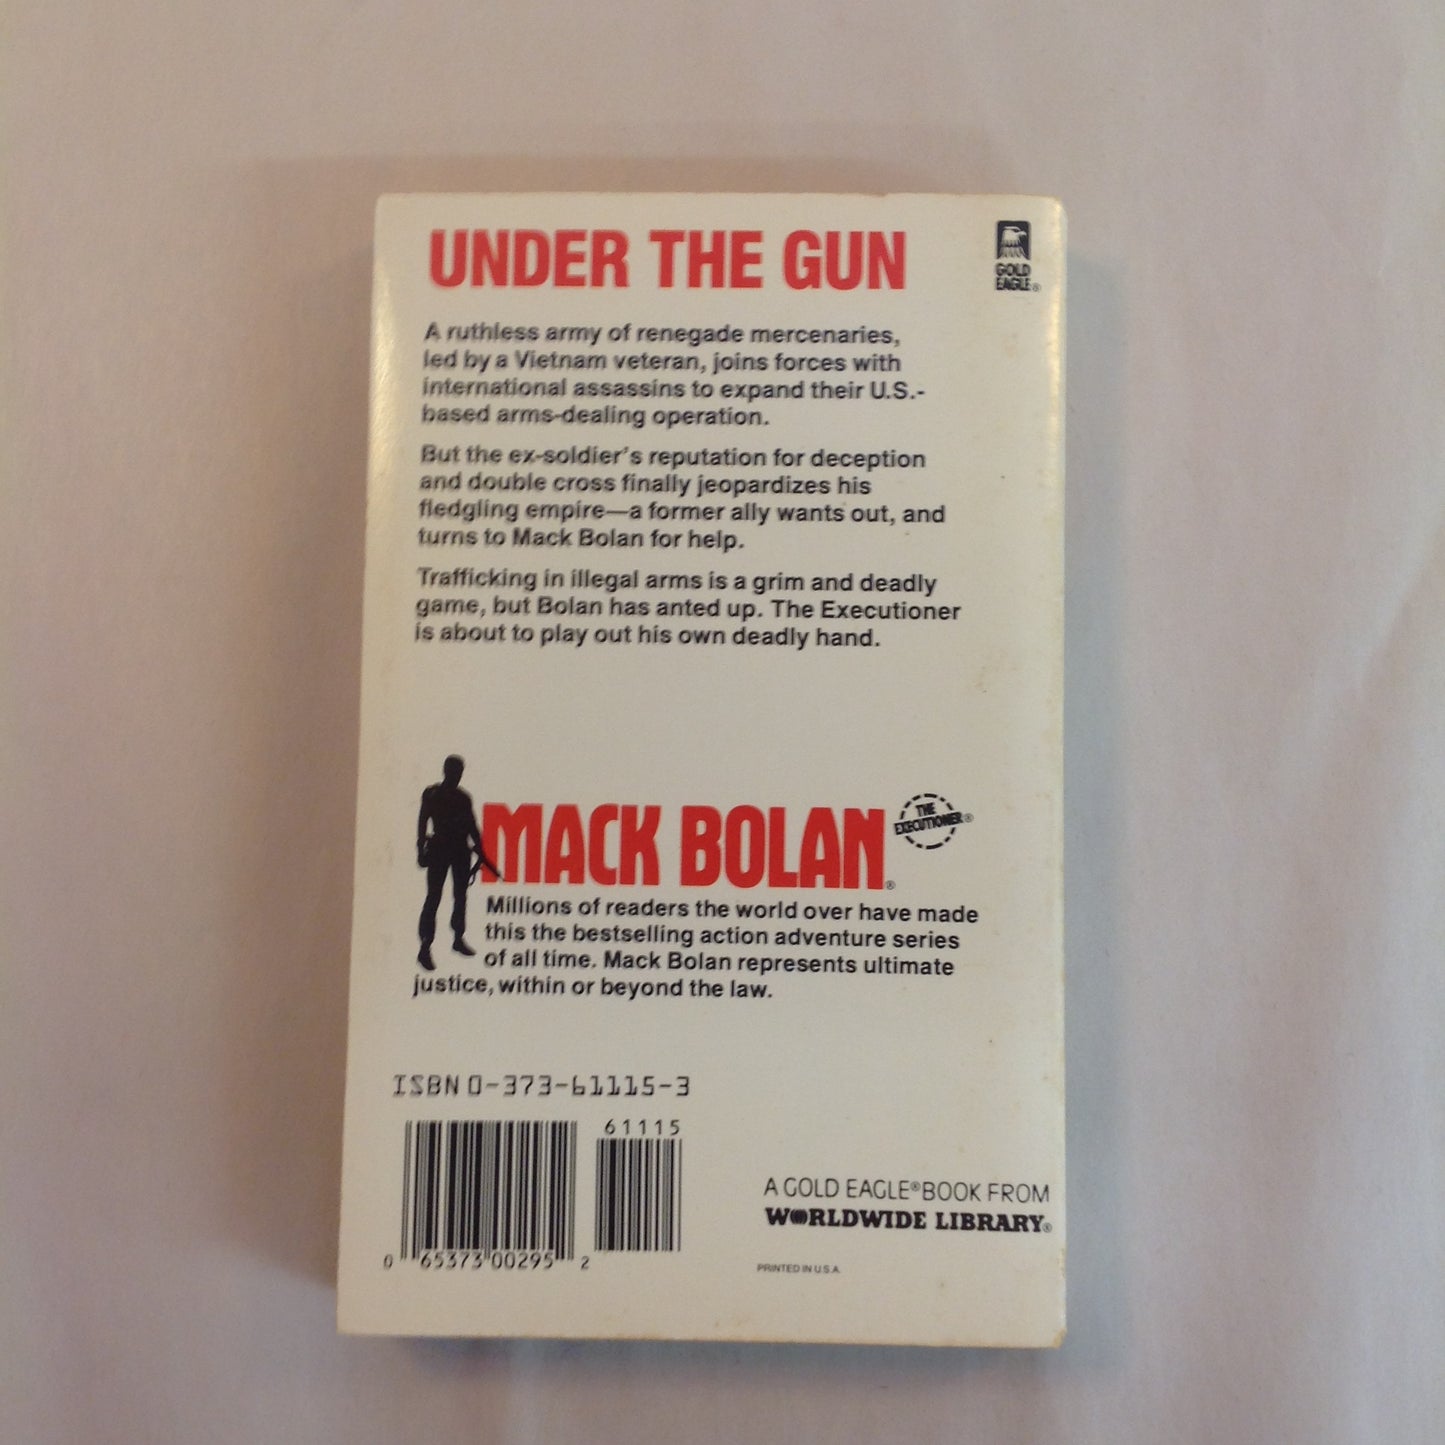 Vintage 1988 Mass Market Paperback Don Pendleton's Mack Bolan The Executioner #115: Circle of Steel